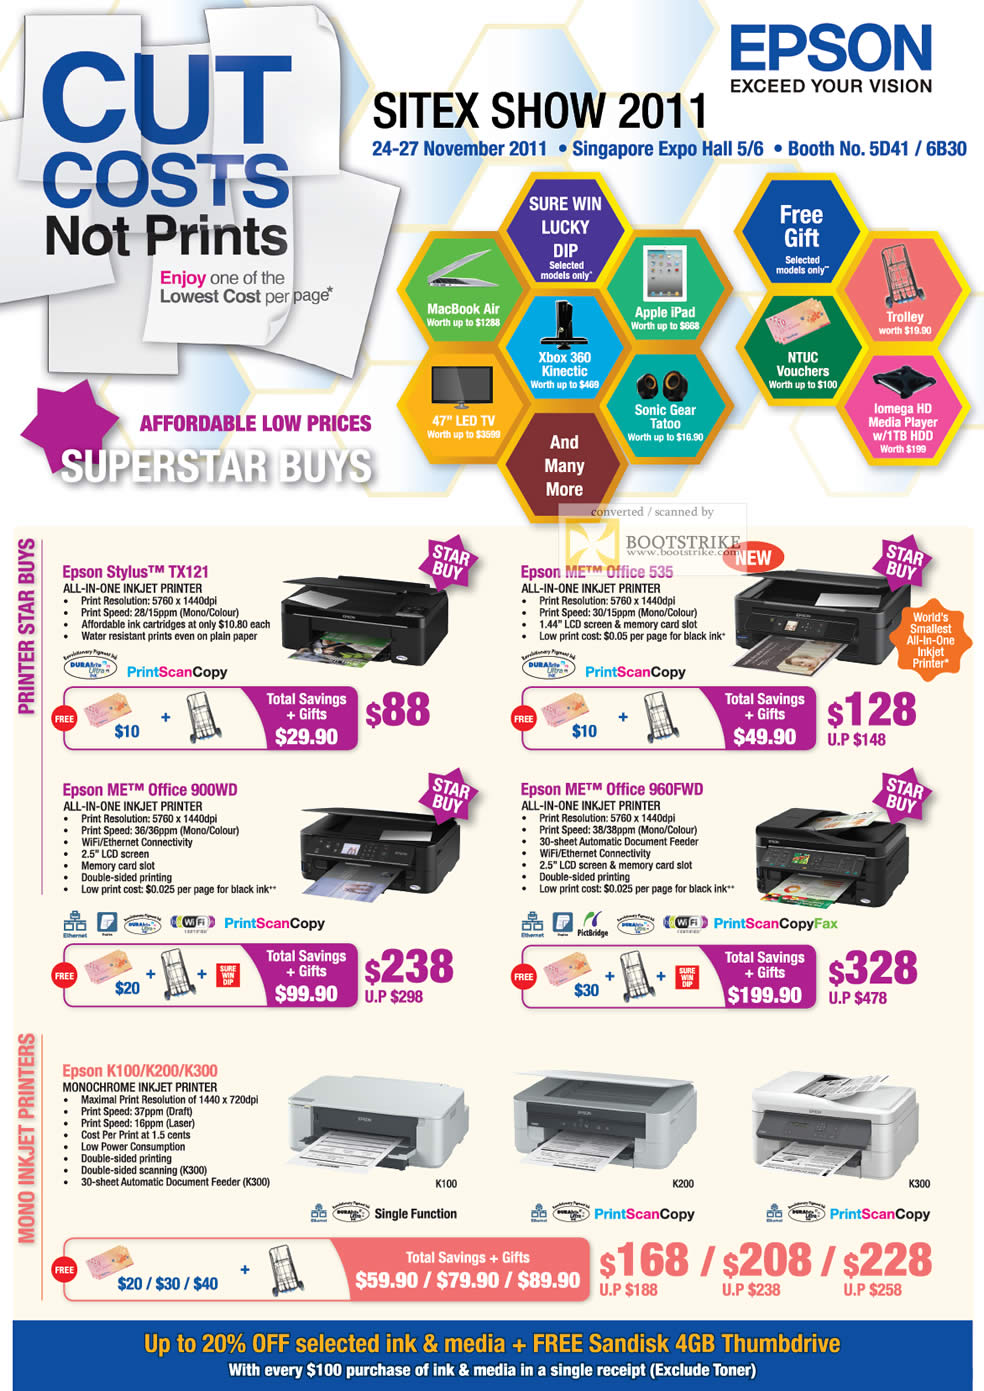 SITEX 2011 price list image brochure of Epson Printers Inkjet Stylus TX121, ME Office 535, 900WD, 960FWD, K100, K200, K300